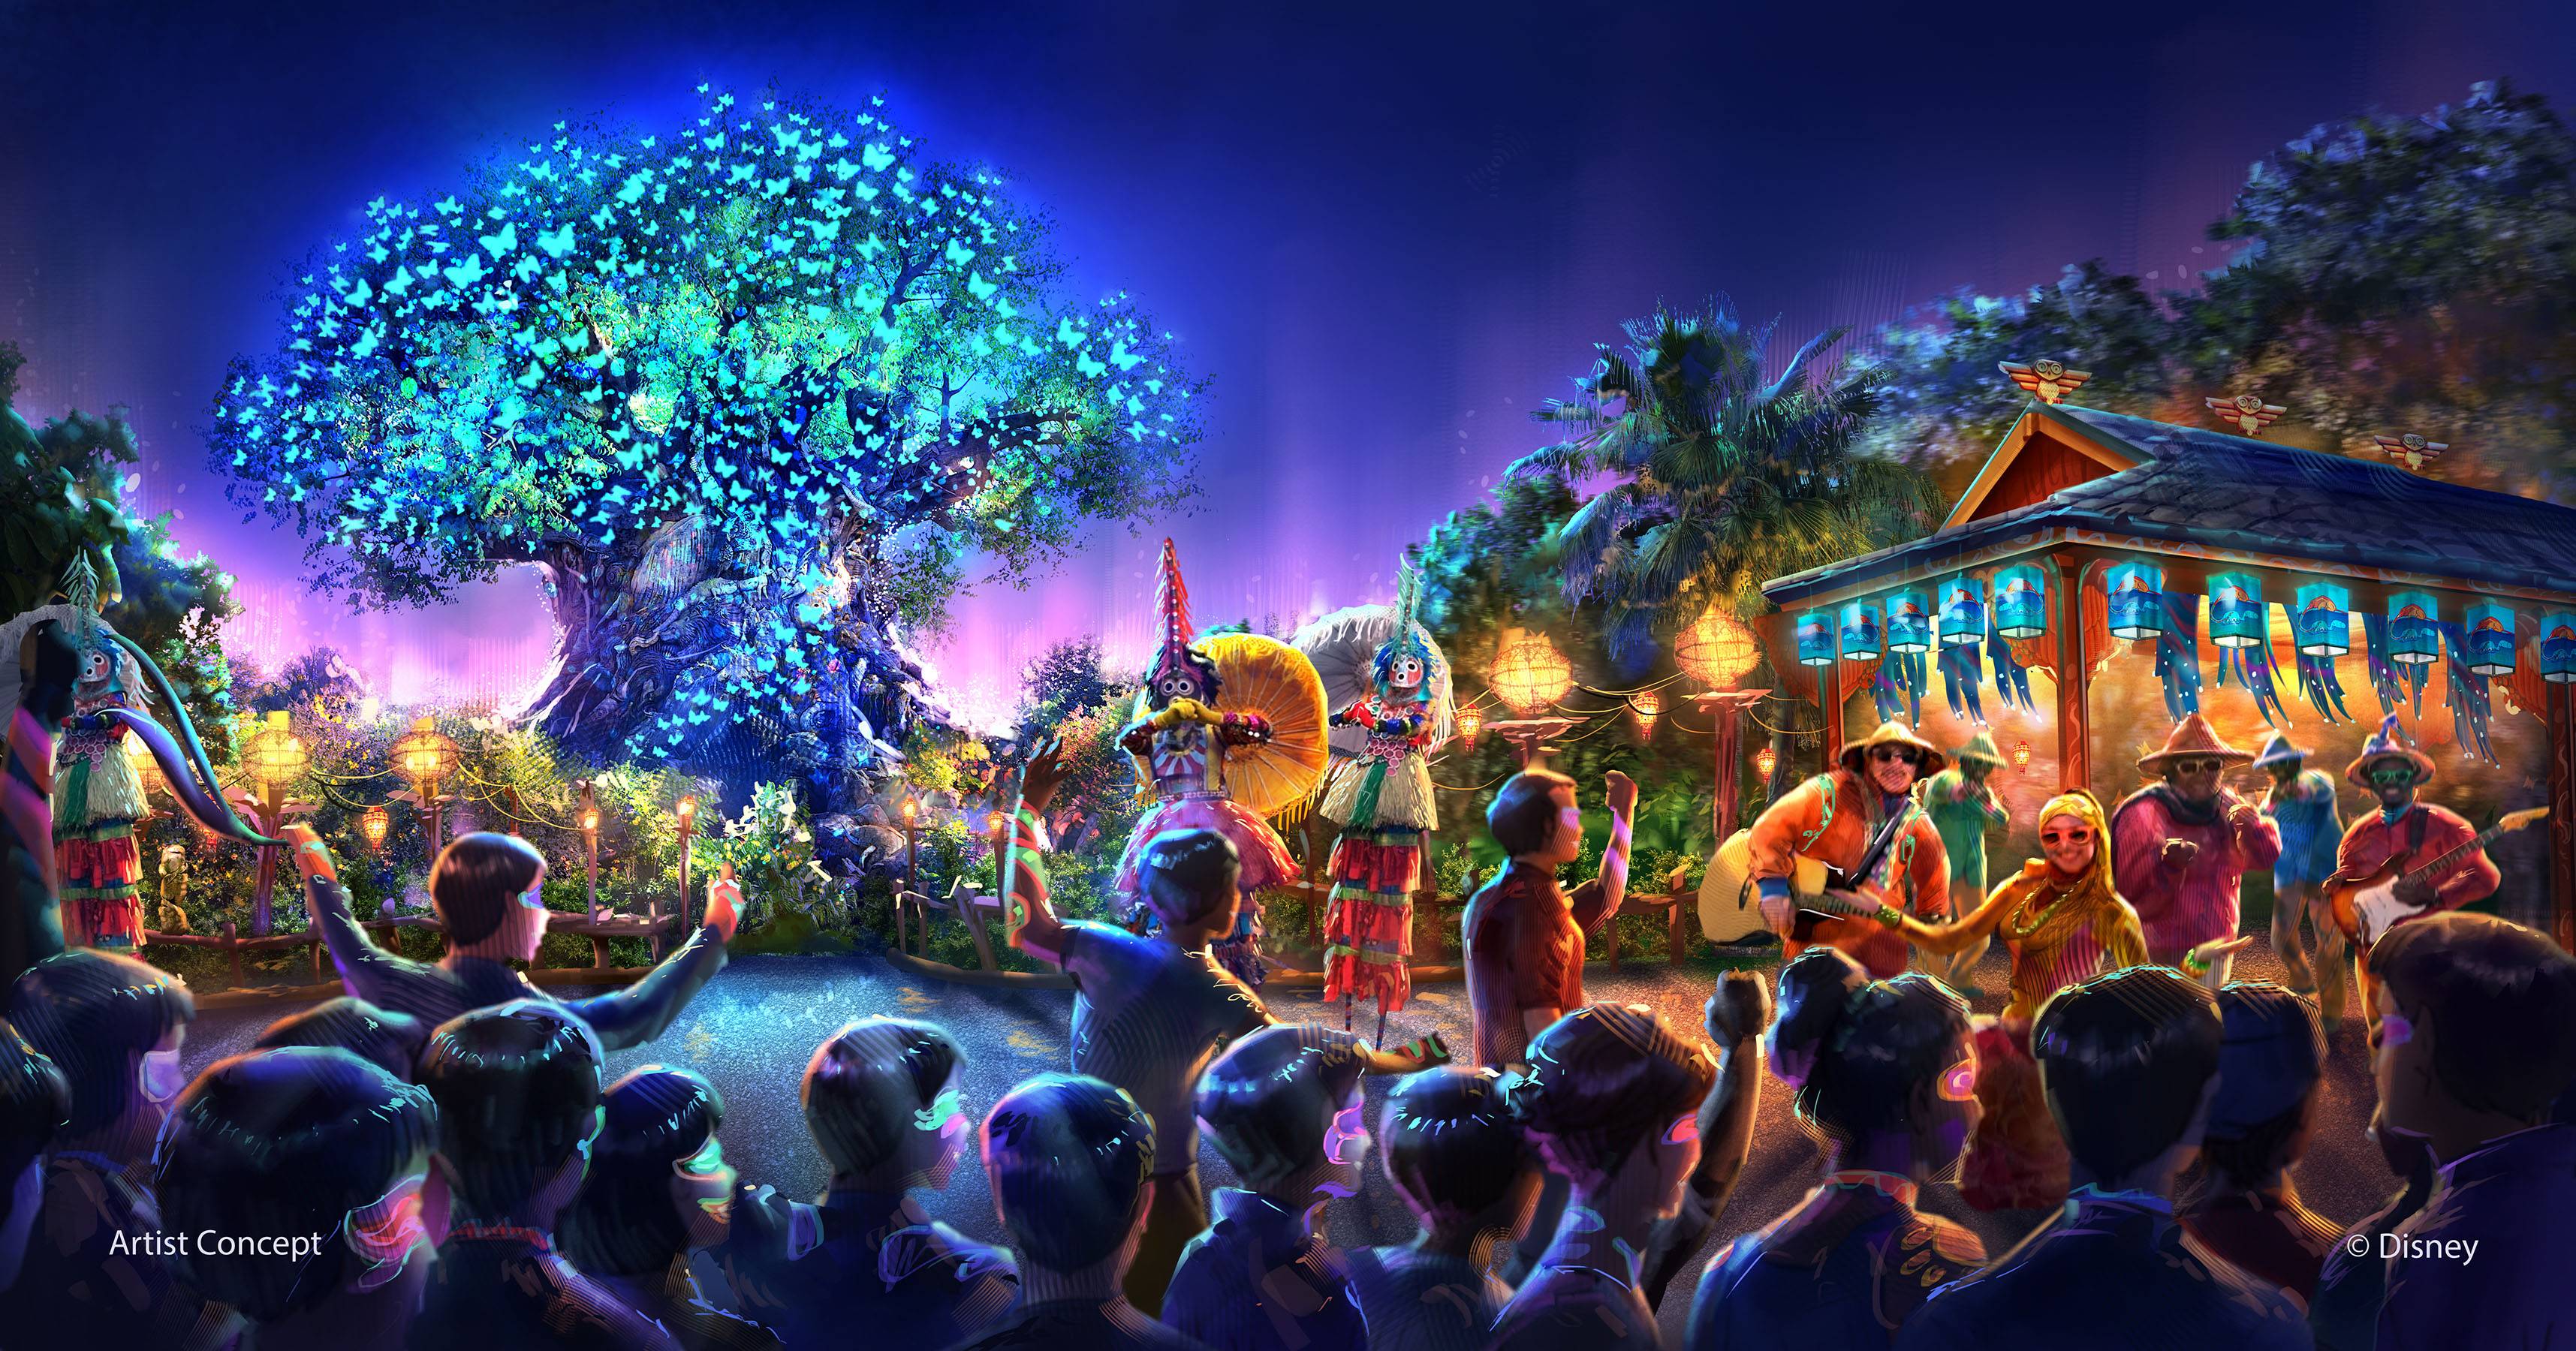 Nighttime entertainment at Disney's Animal Kingdom concept art